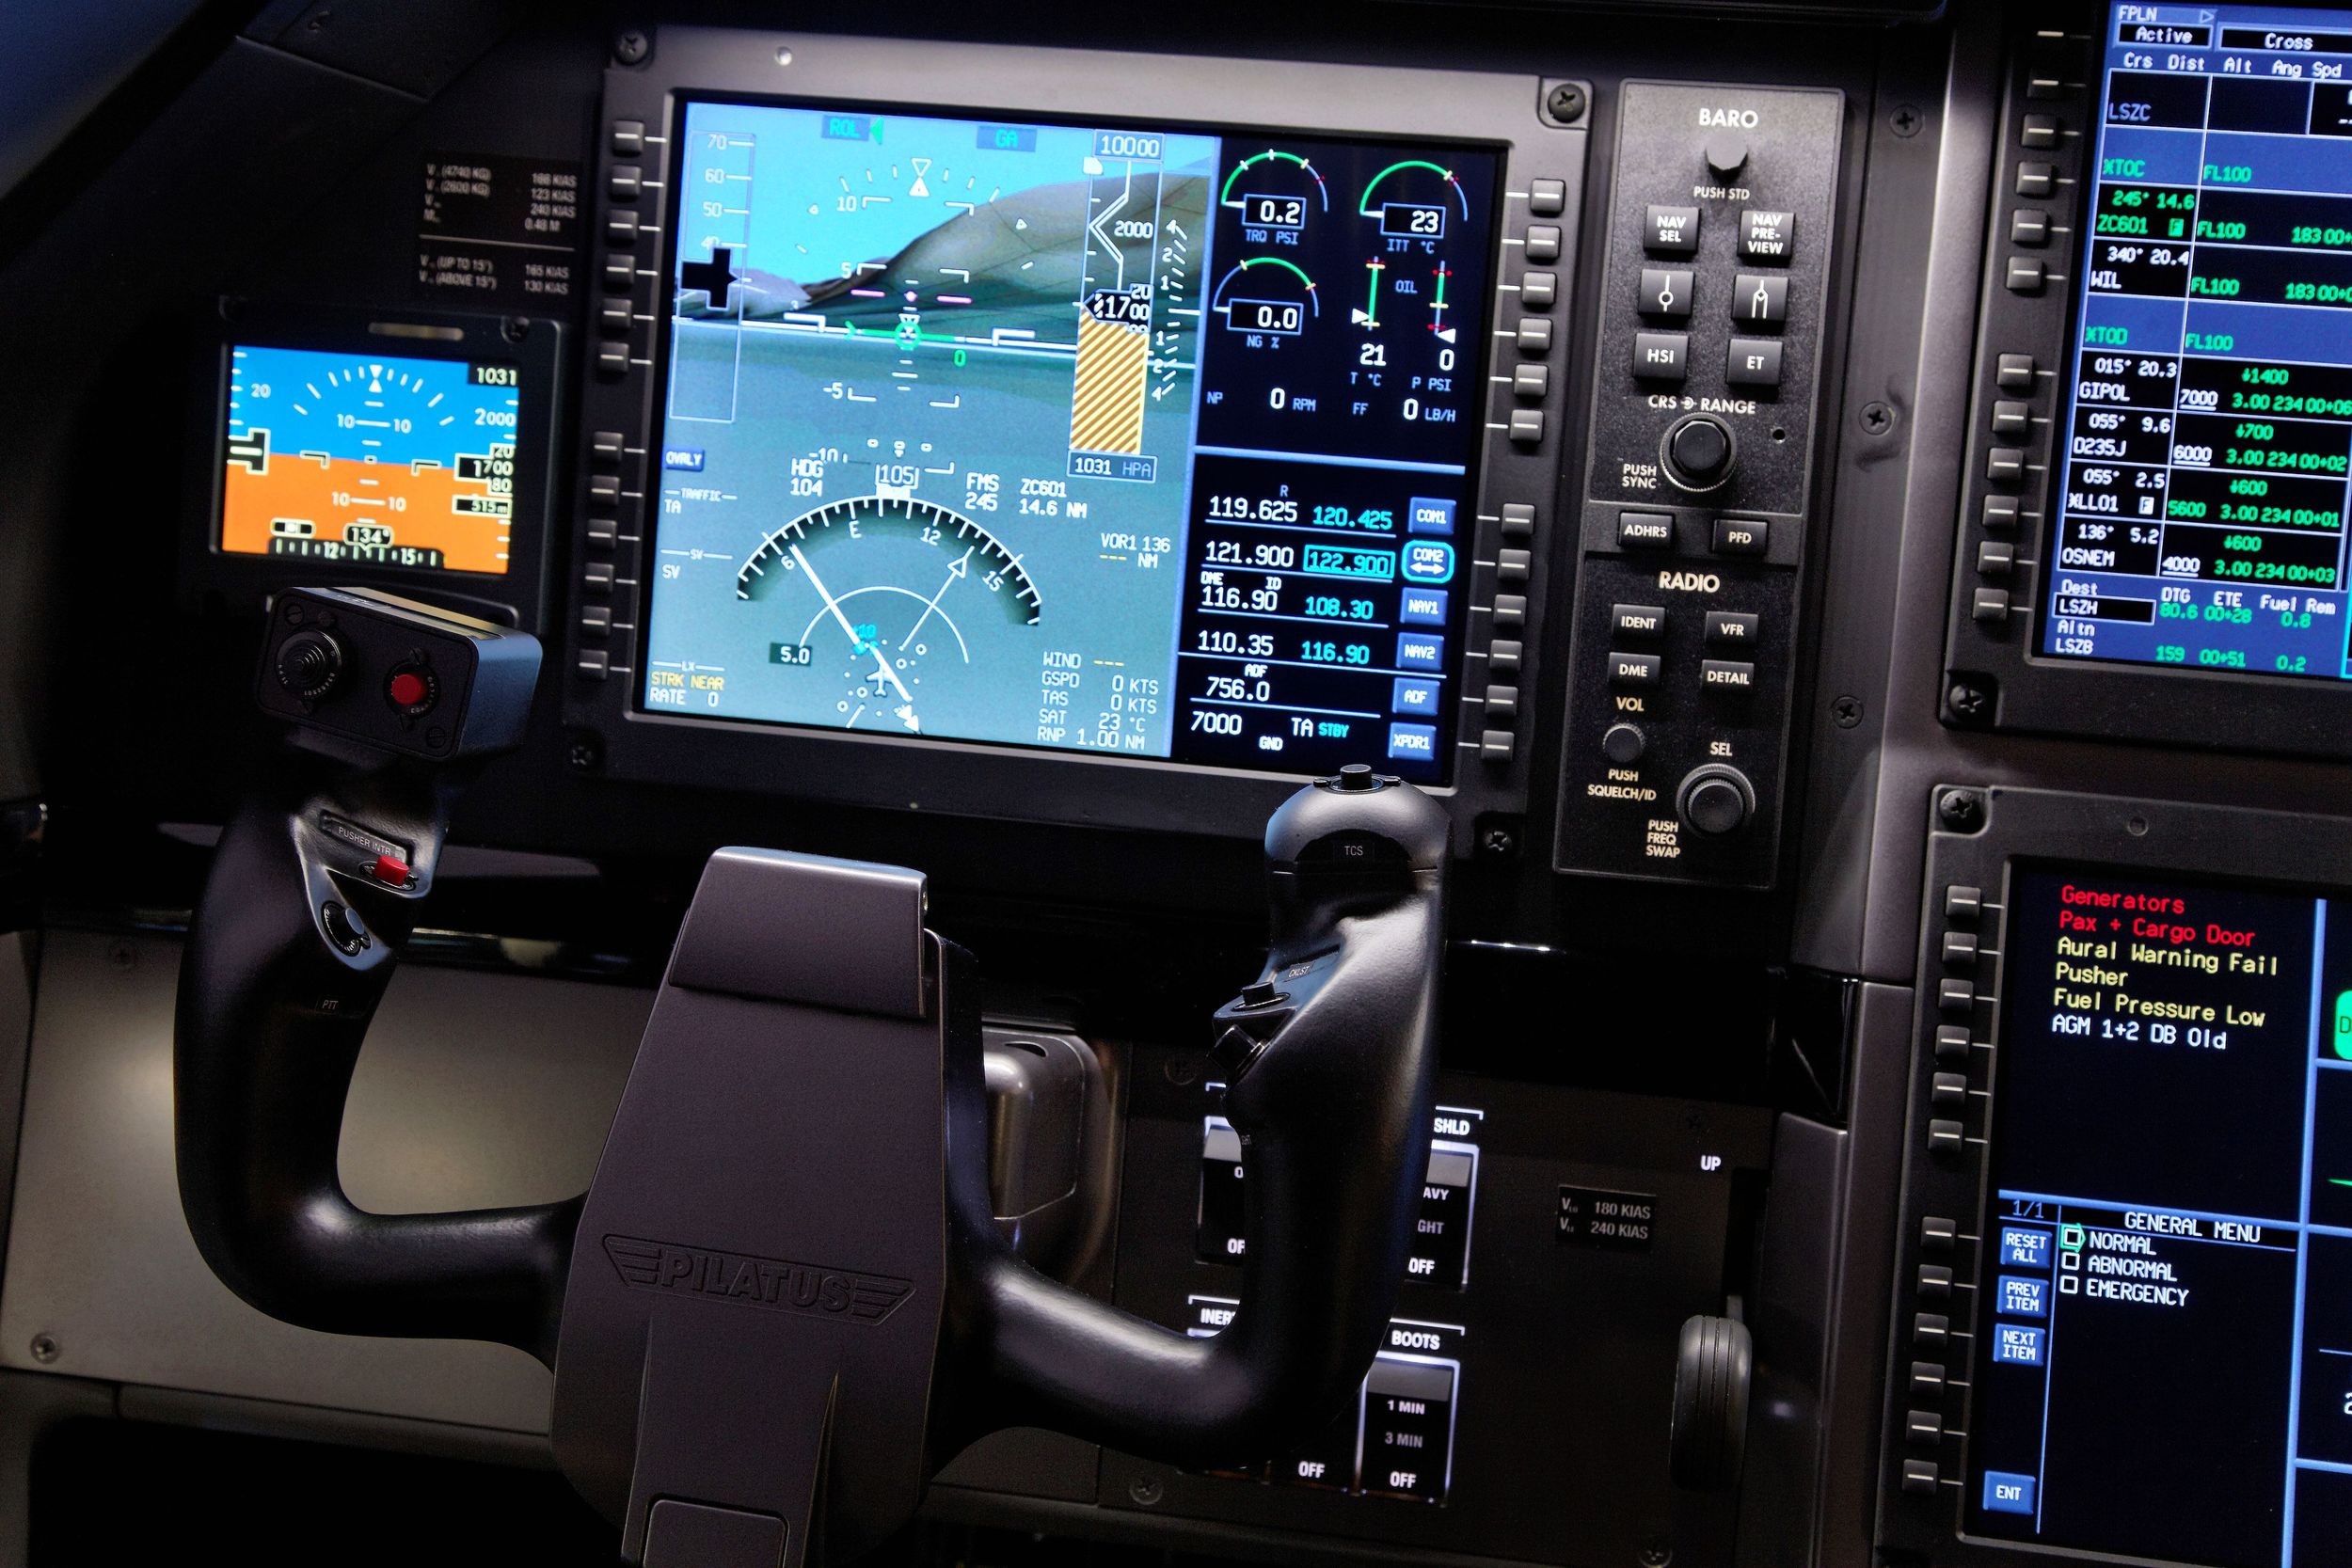   Modern avionics for safety.  